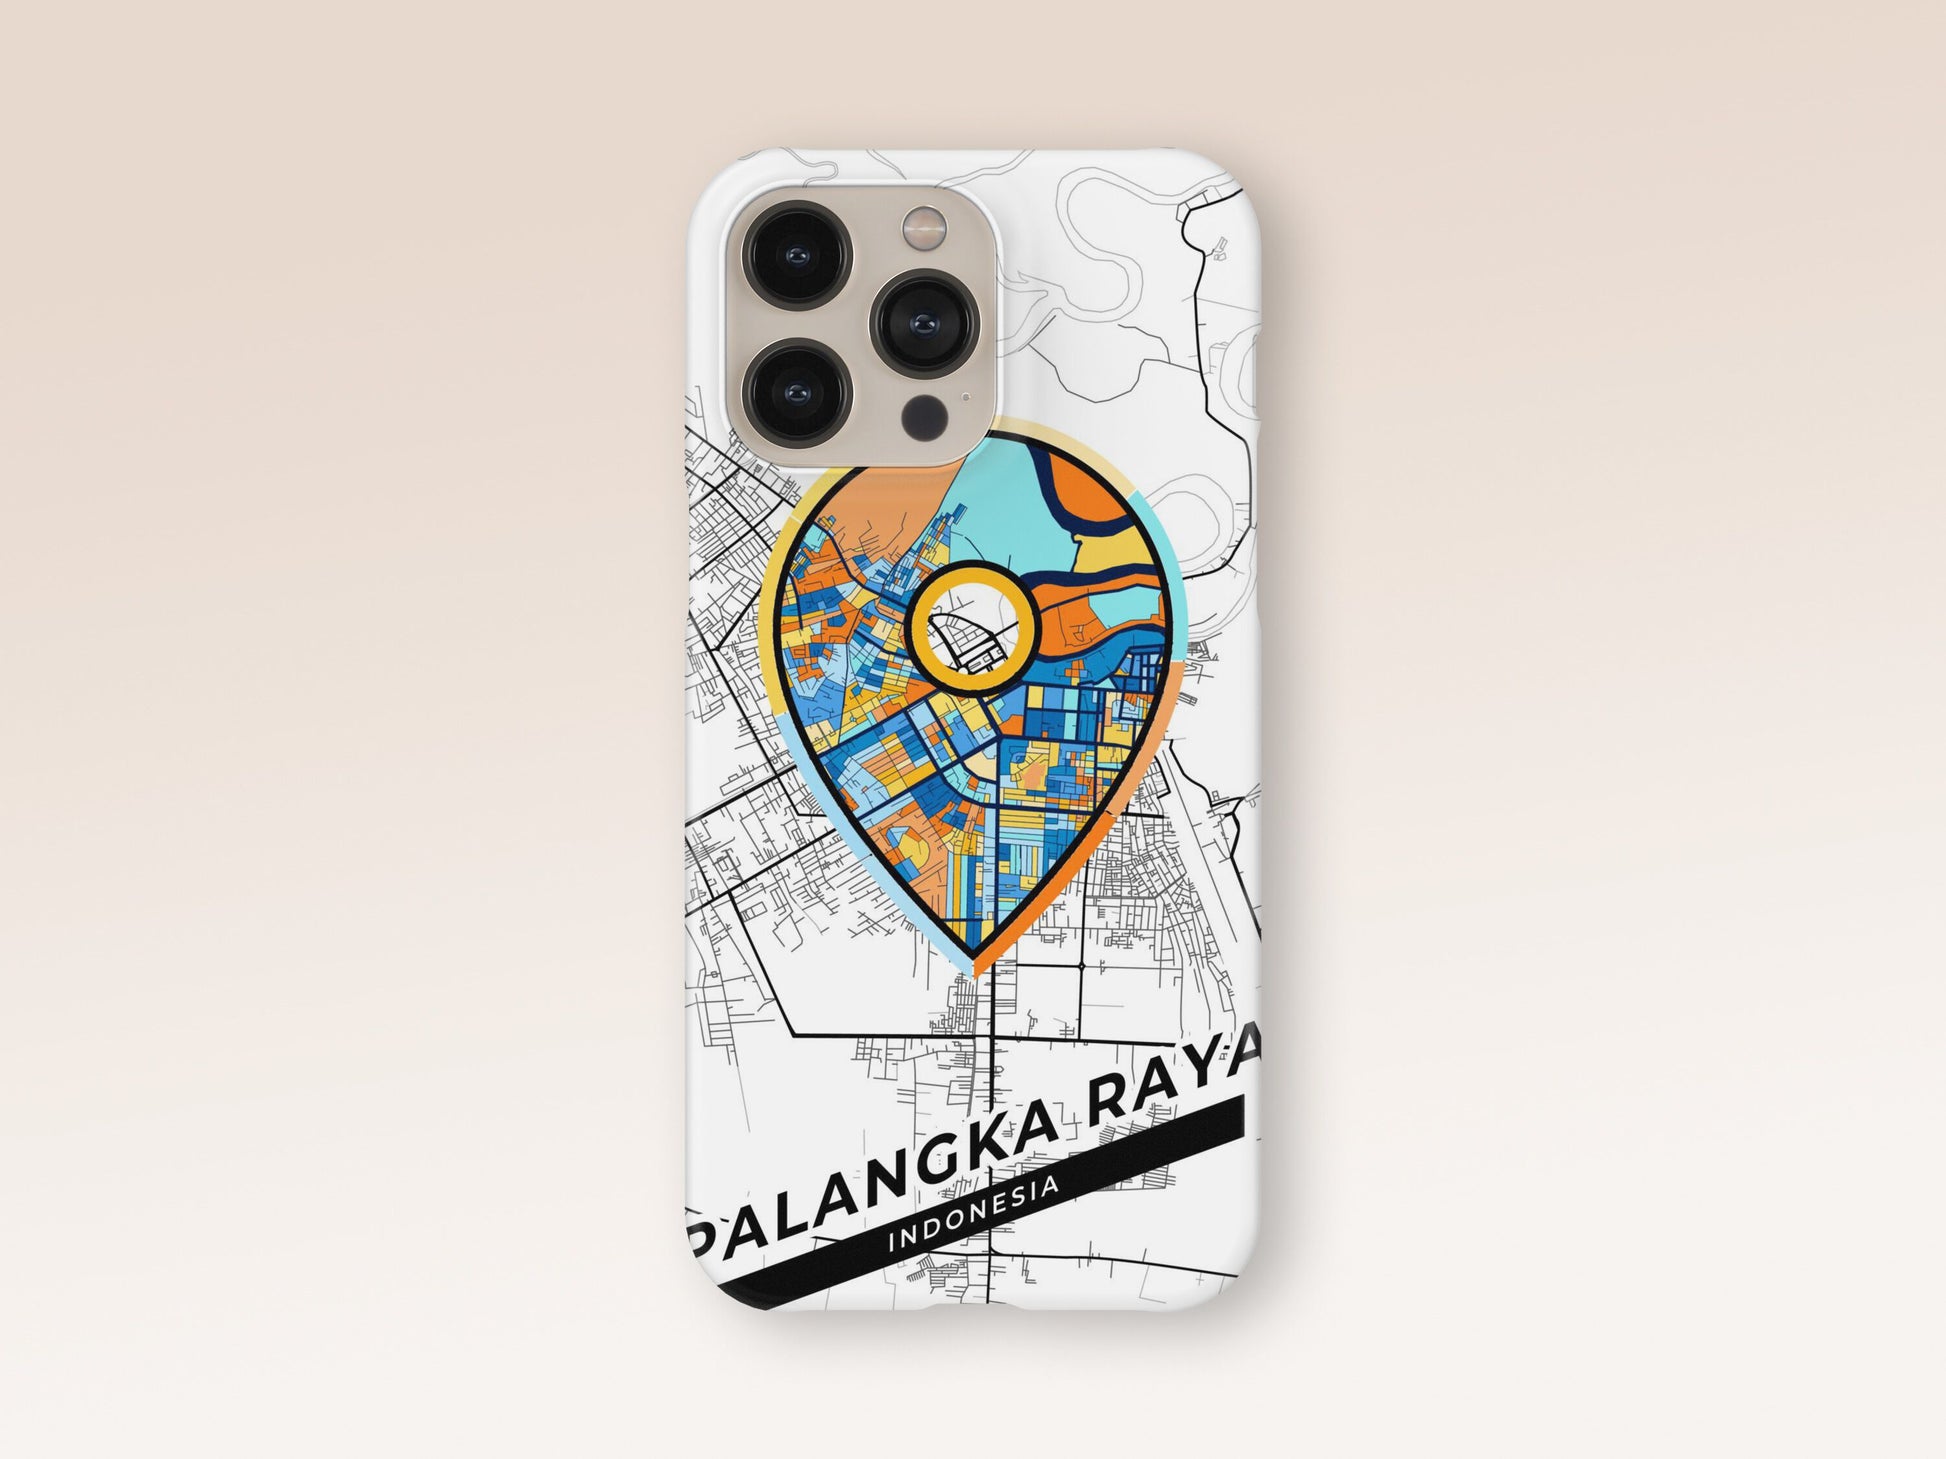 Palangka Raya Indonesia slim phone case with colorful icon 1